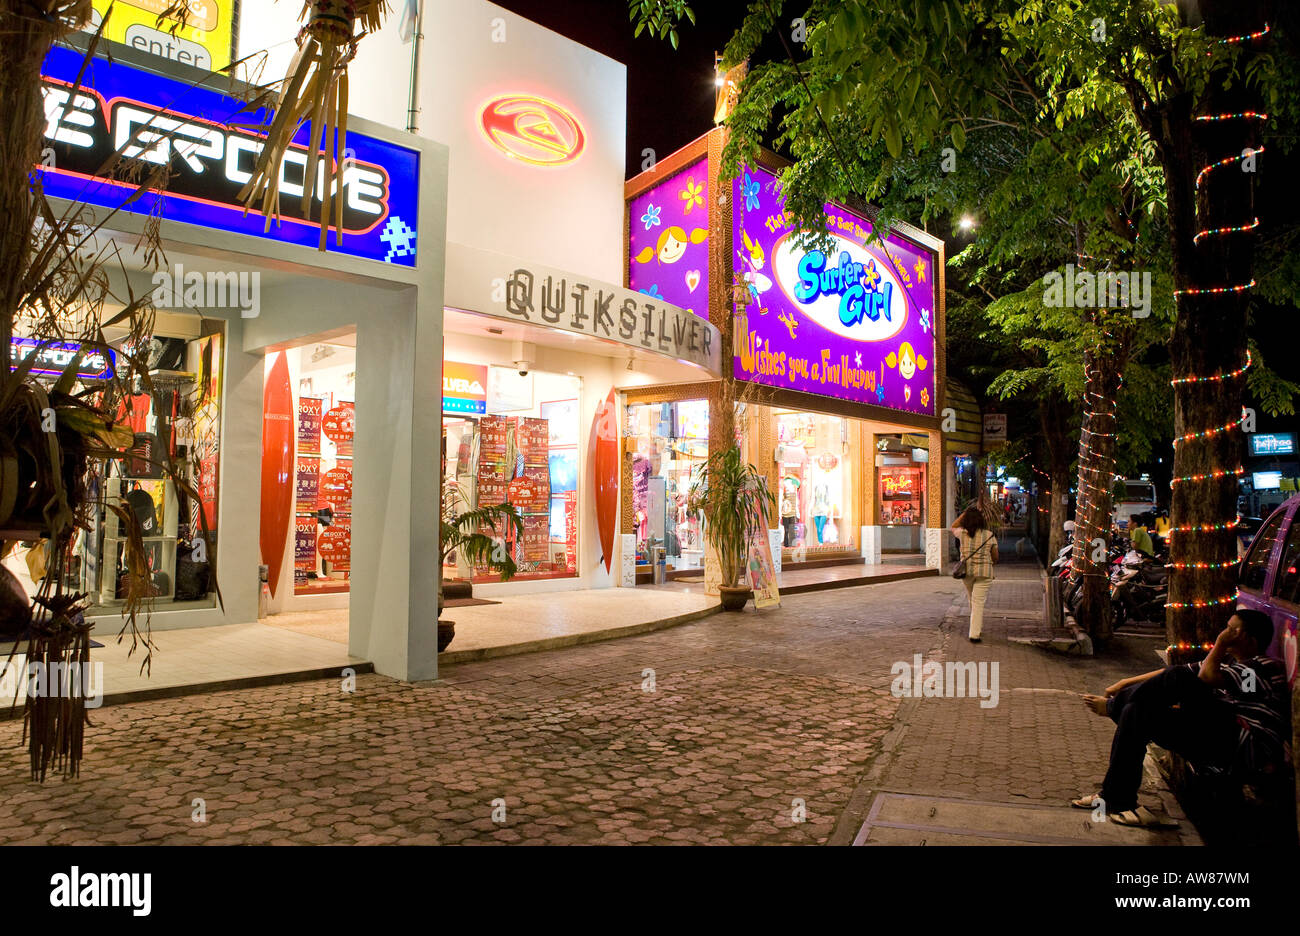 Surfer Girl Shop Nightime in Downtown Kuta Bali Indonesia Stock Photo